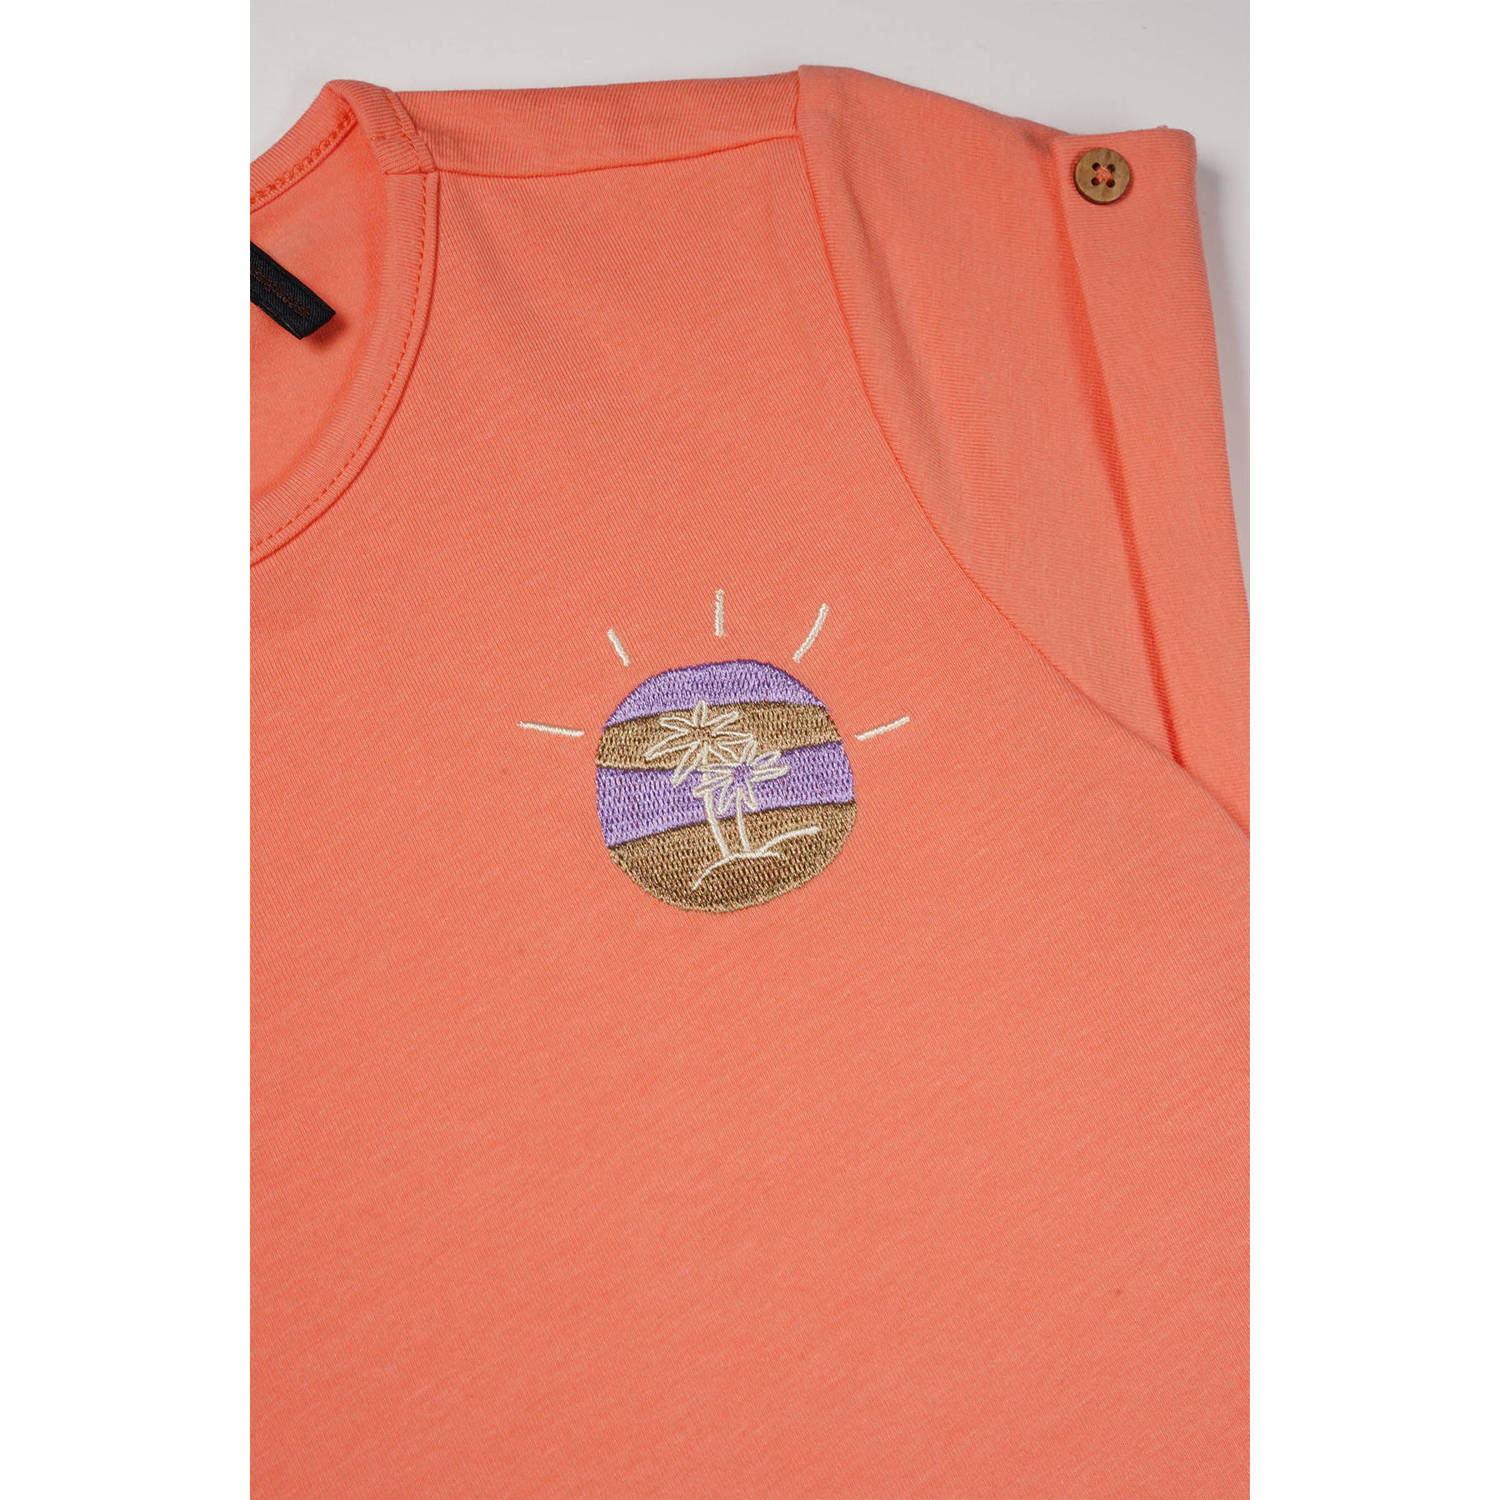 NONO T-shirt Kiki met printopdruk koraaloranje